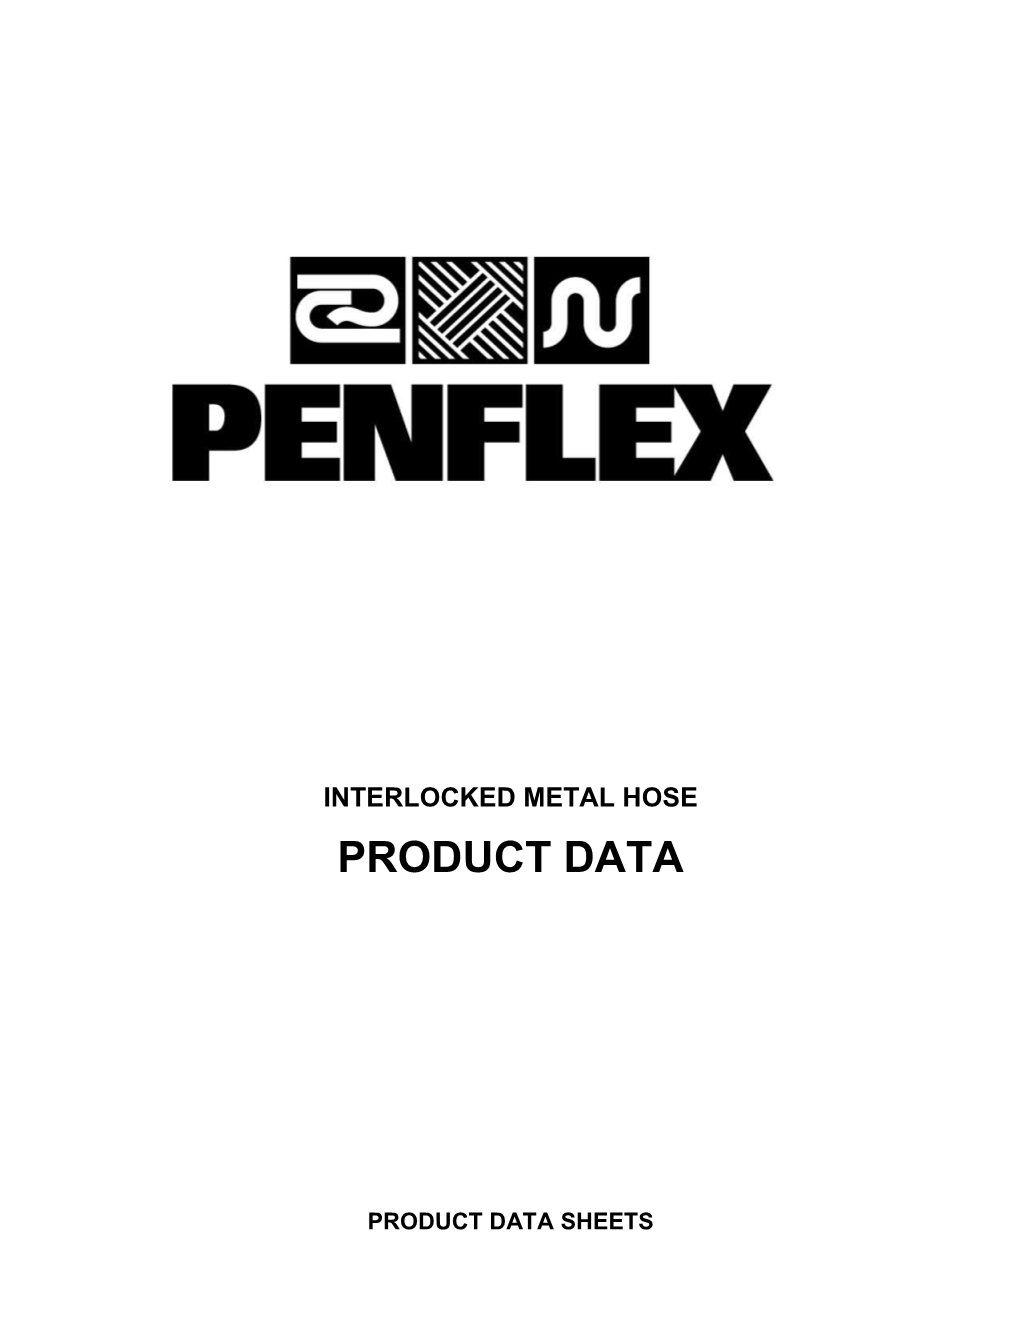 Penflex Corrugated Hose Is a High Quality